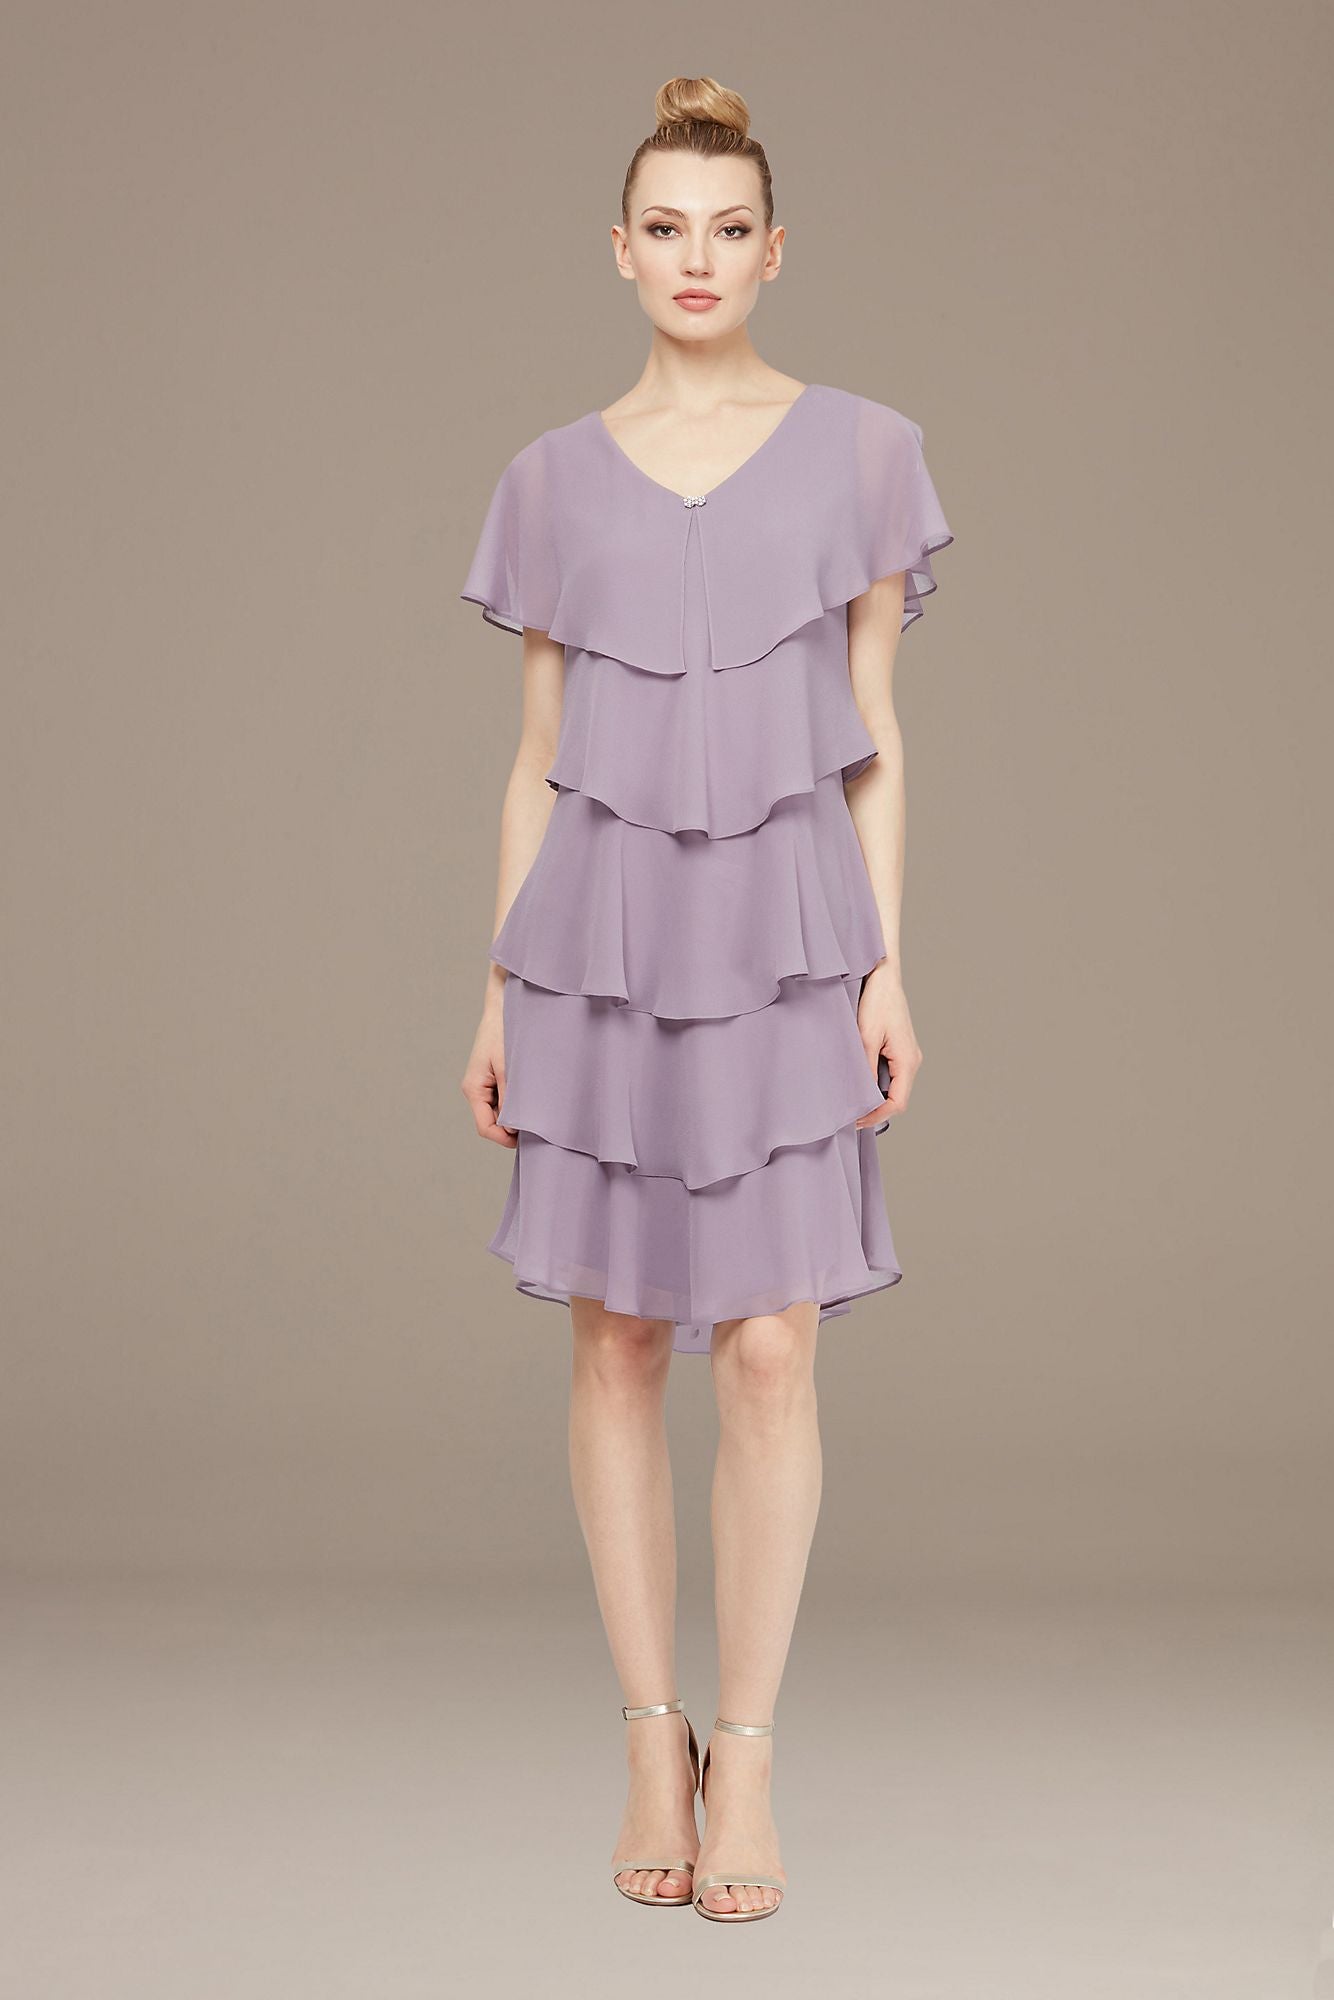 SL Fashions Short Formal Dress 1175251 - The Dress Outlet